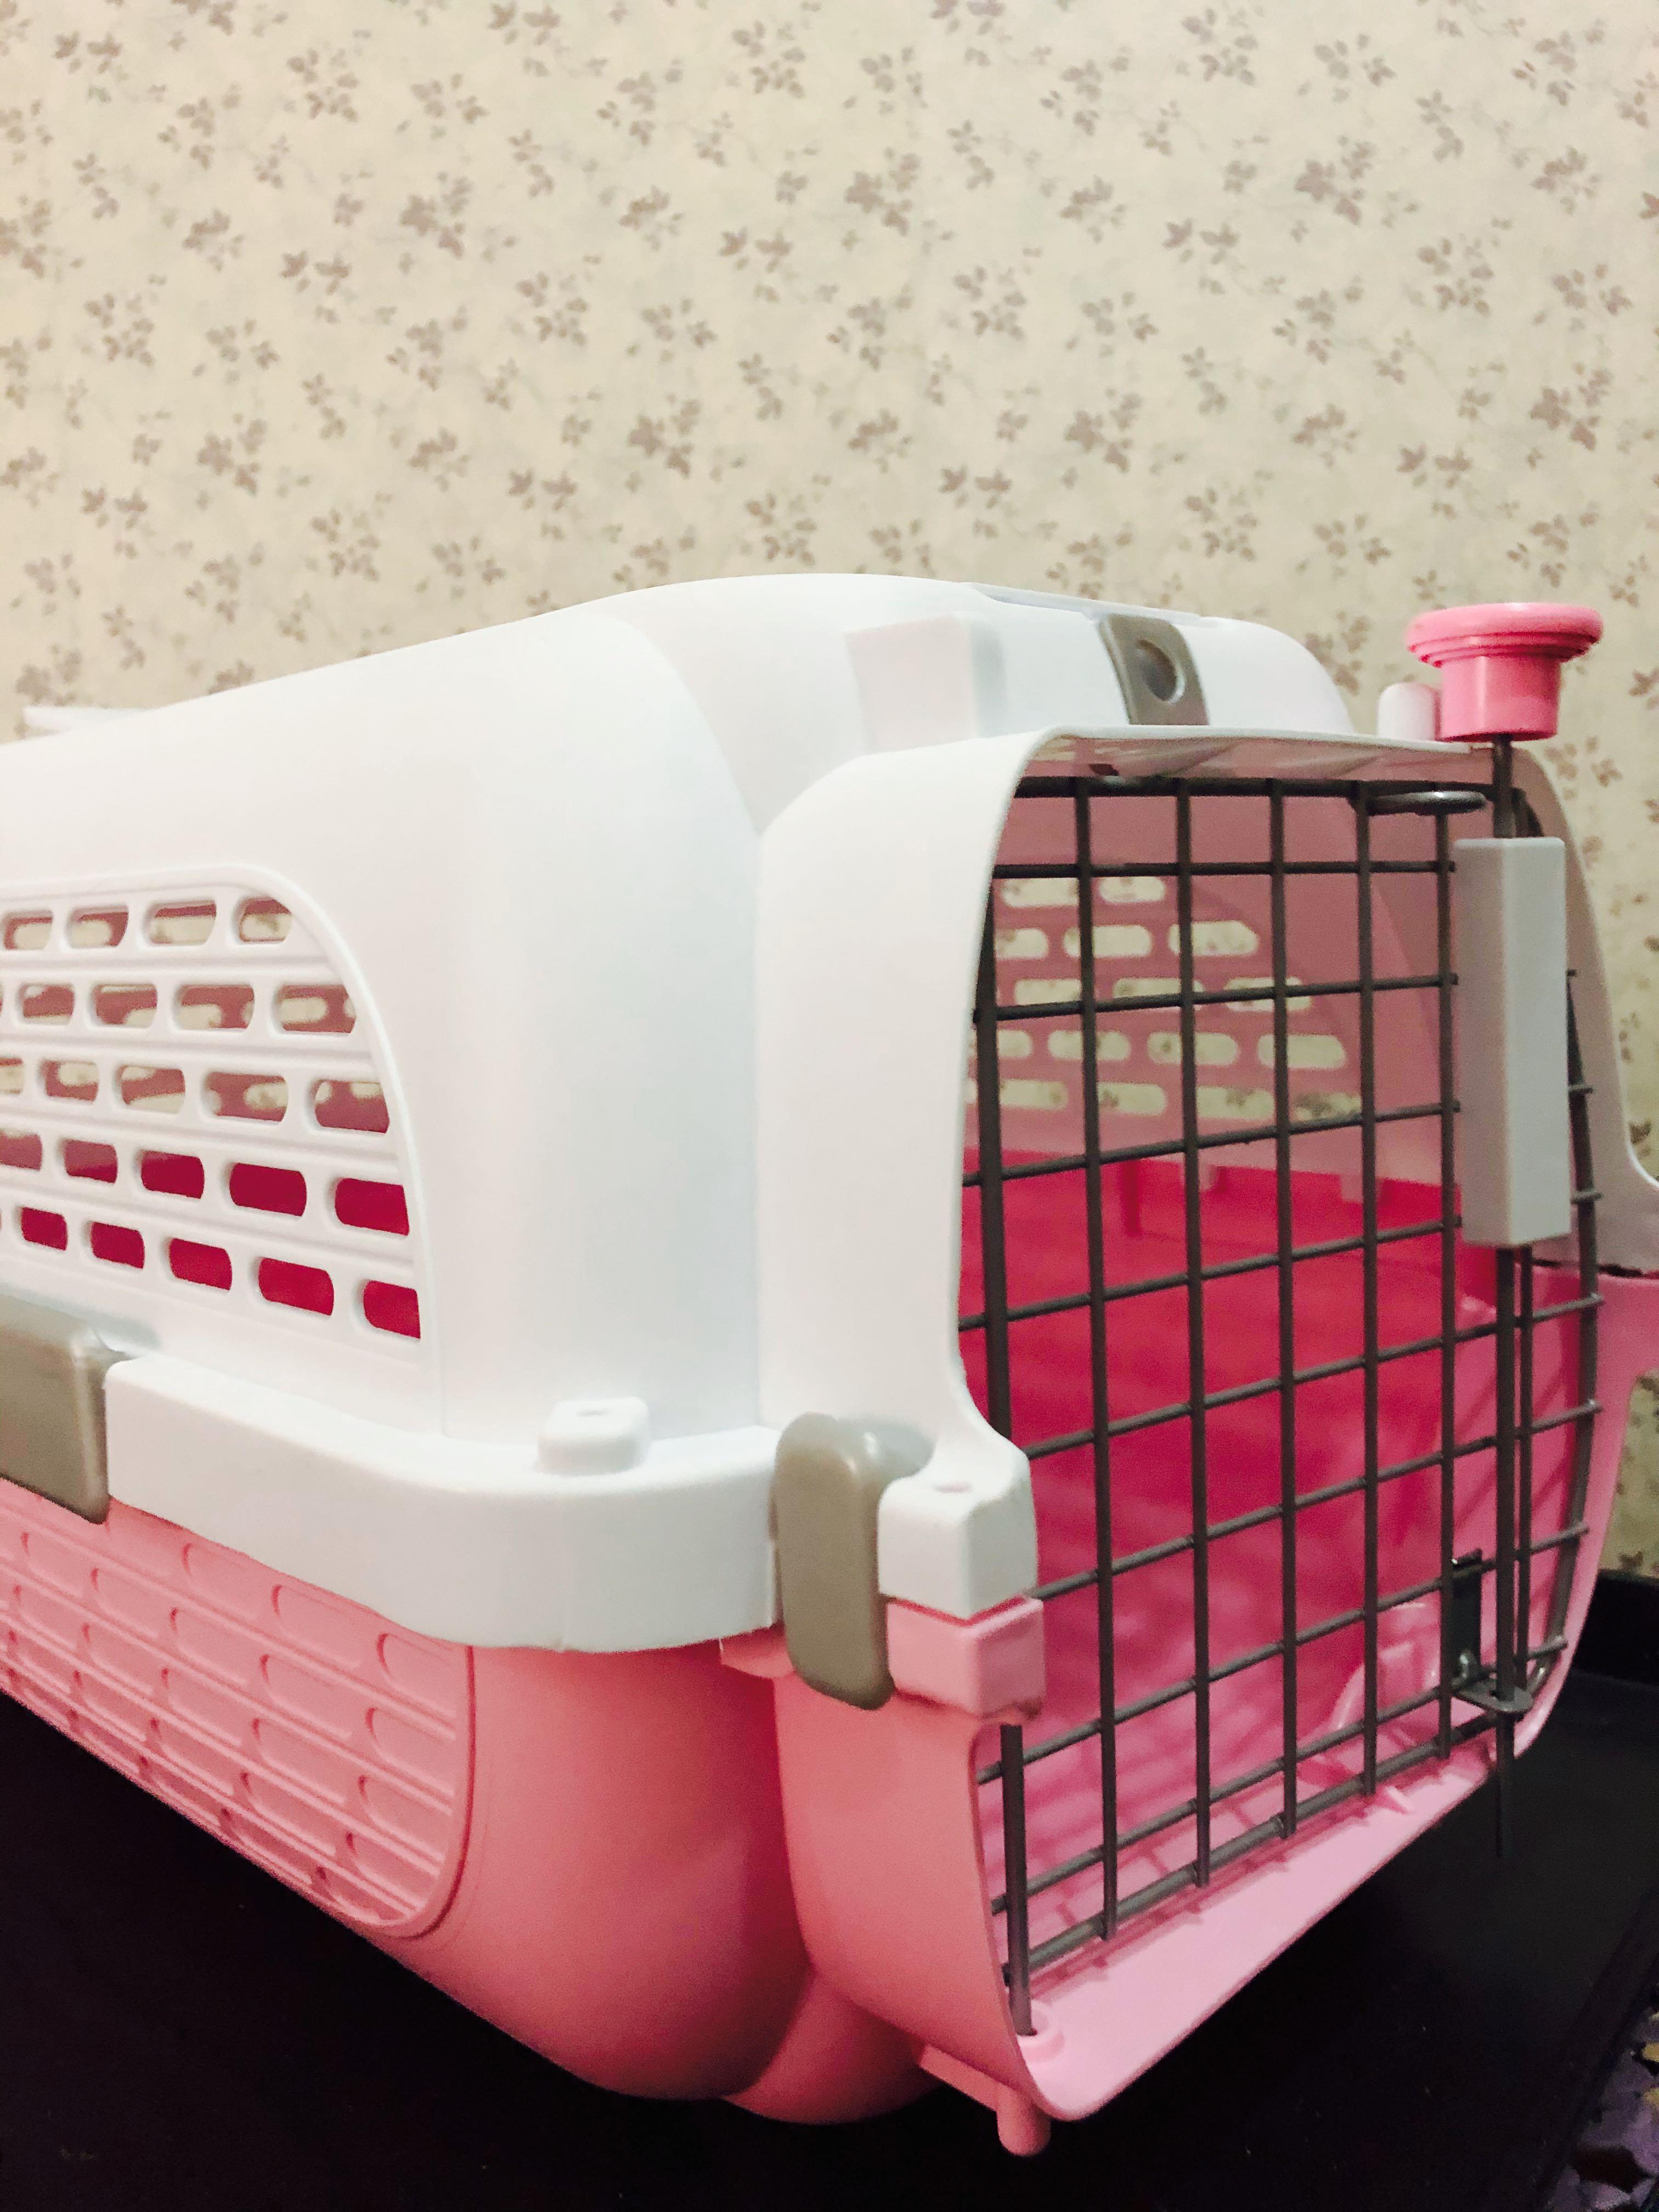 cat carrier pink